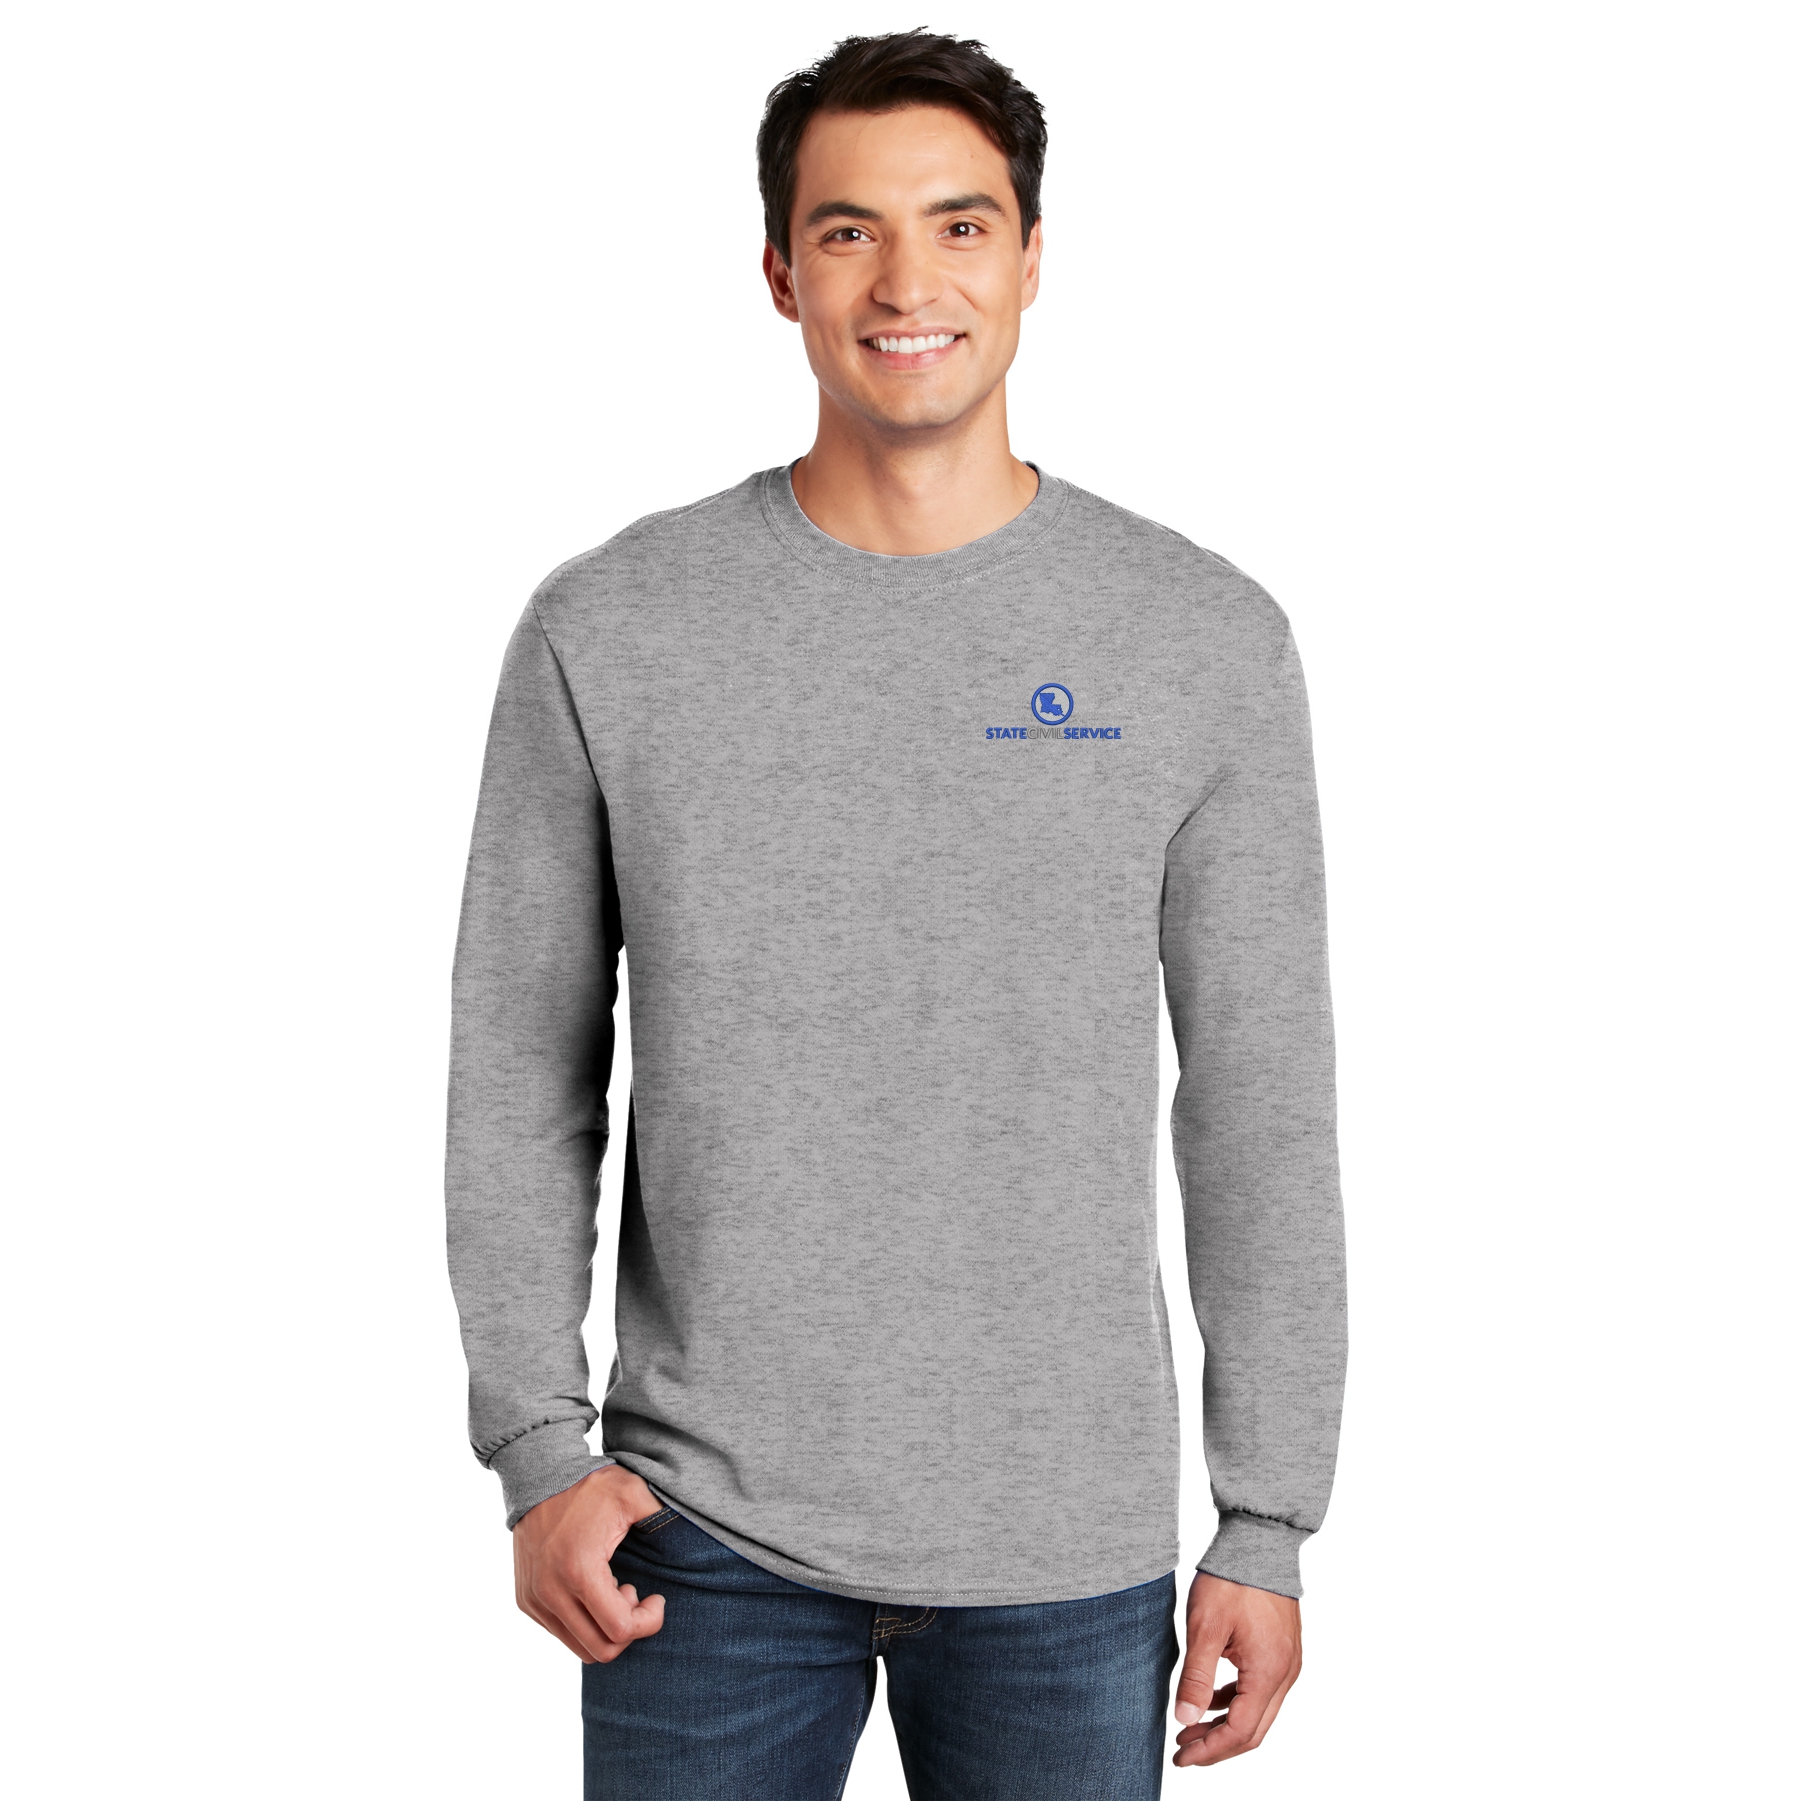 Cotton Longsleeve Shirt – LA State Civil Service Store